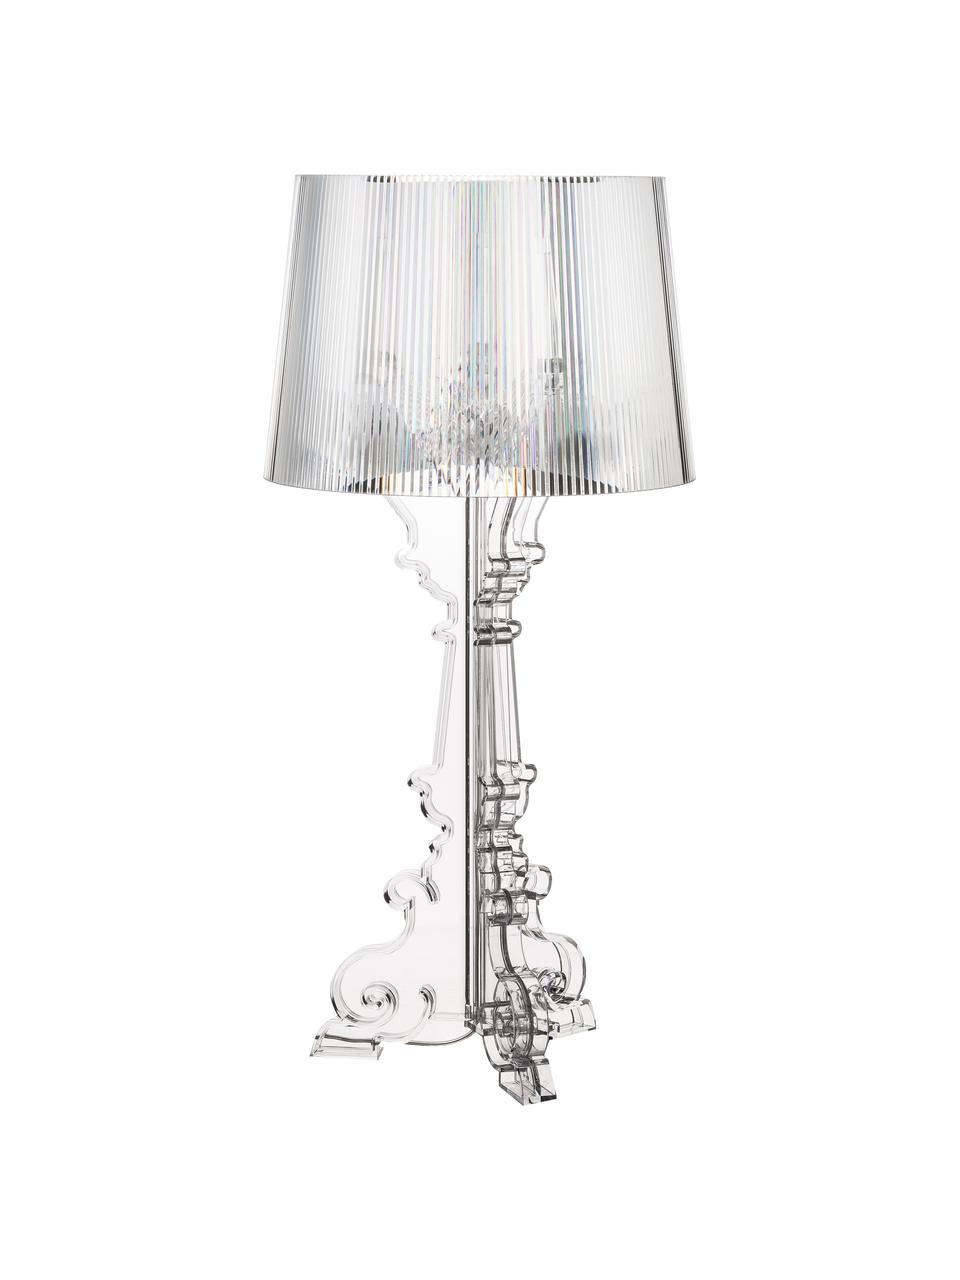 Grote transparante design tafellamp Bourgie, Lampenkap: polycarbonaat Lampvoet, Transparant, Ø 37 x H 78 cm